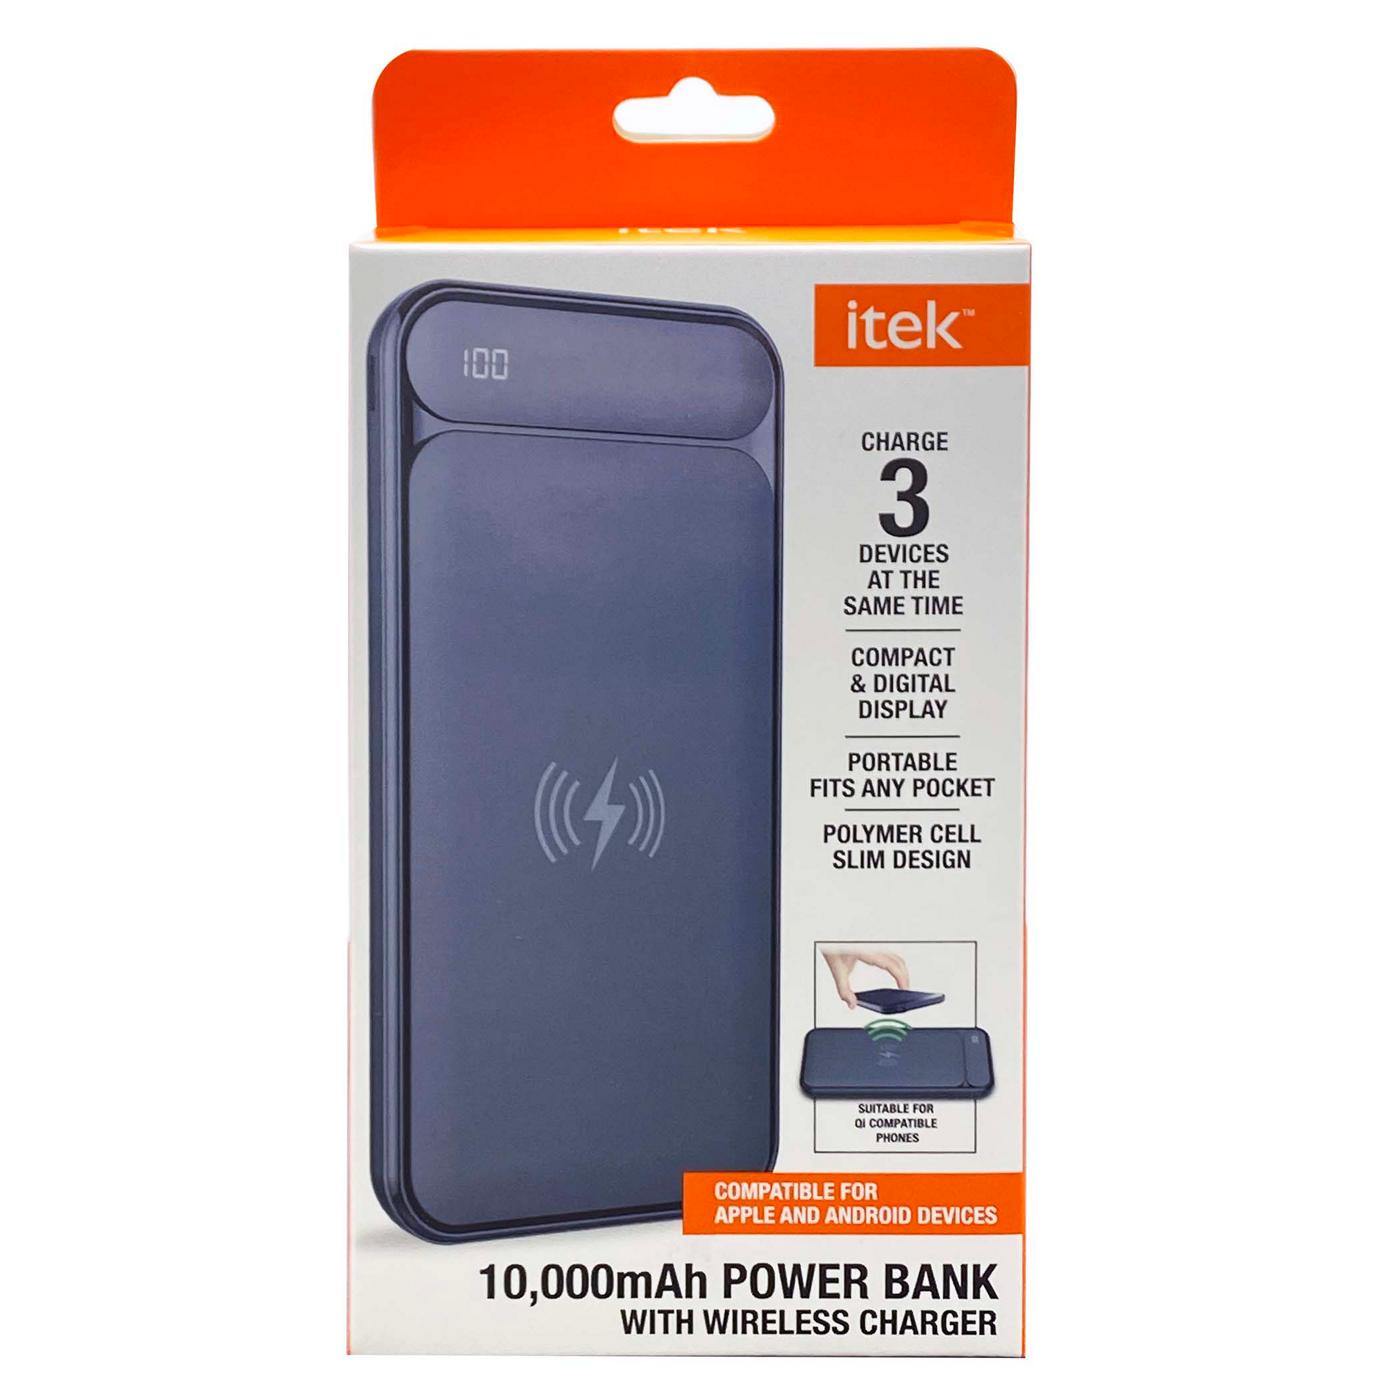 Itek 10,000mAh Power Bank Charging Portable Battery Backup